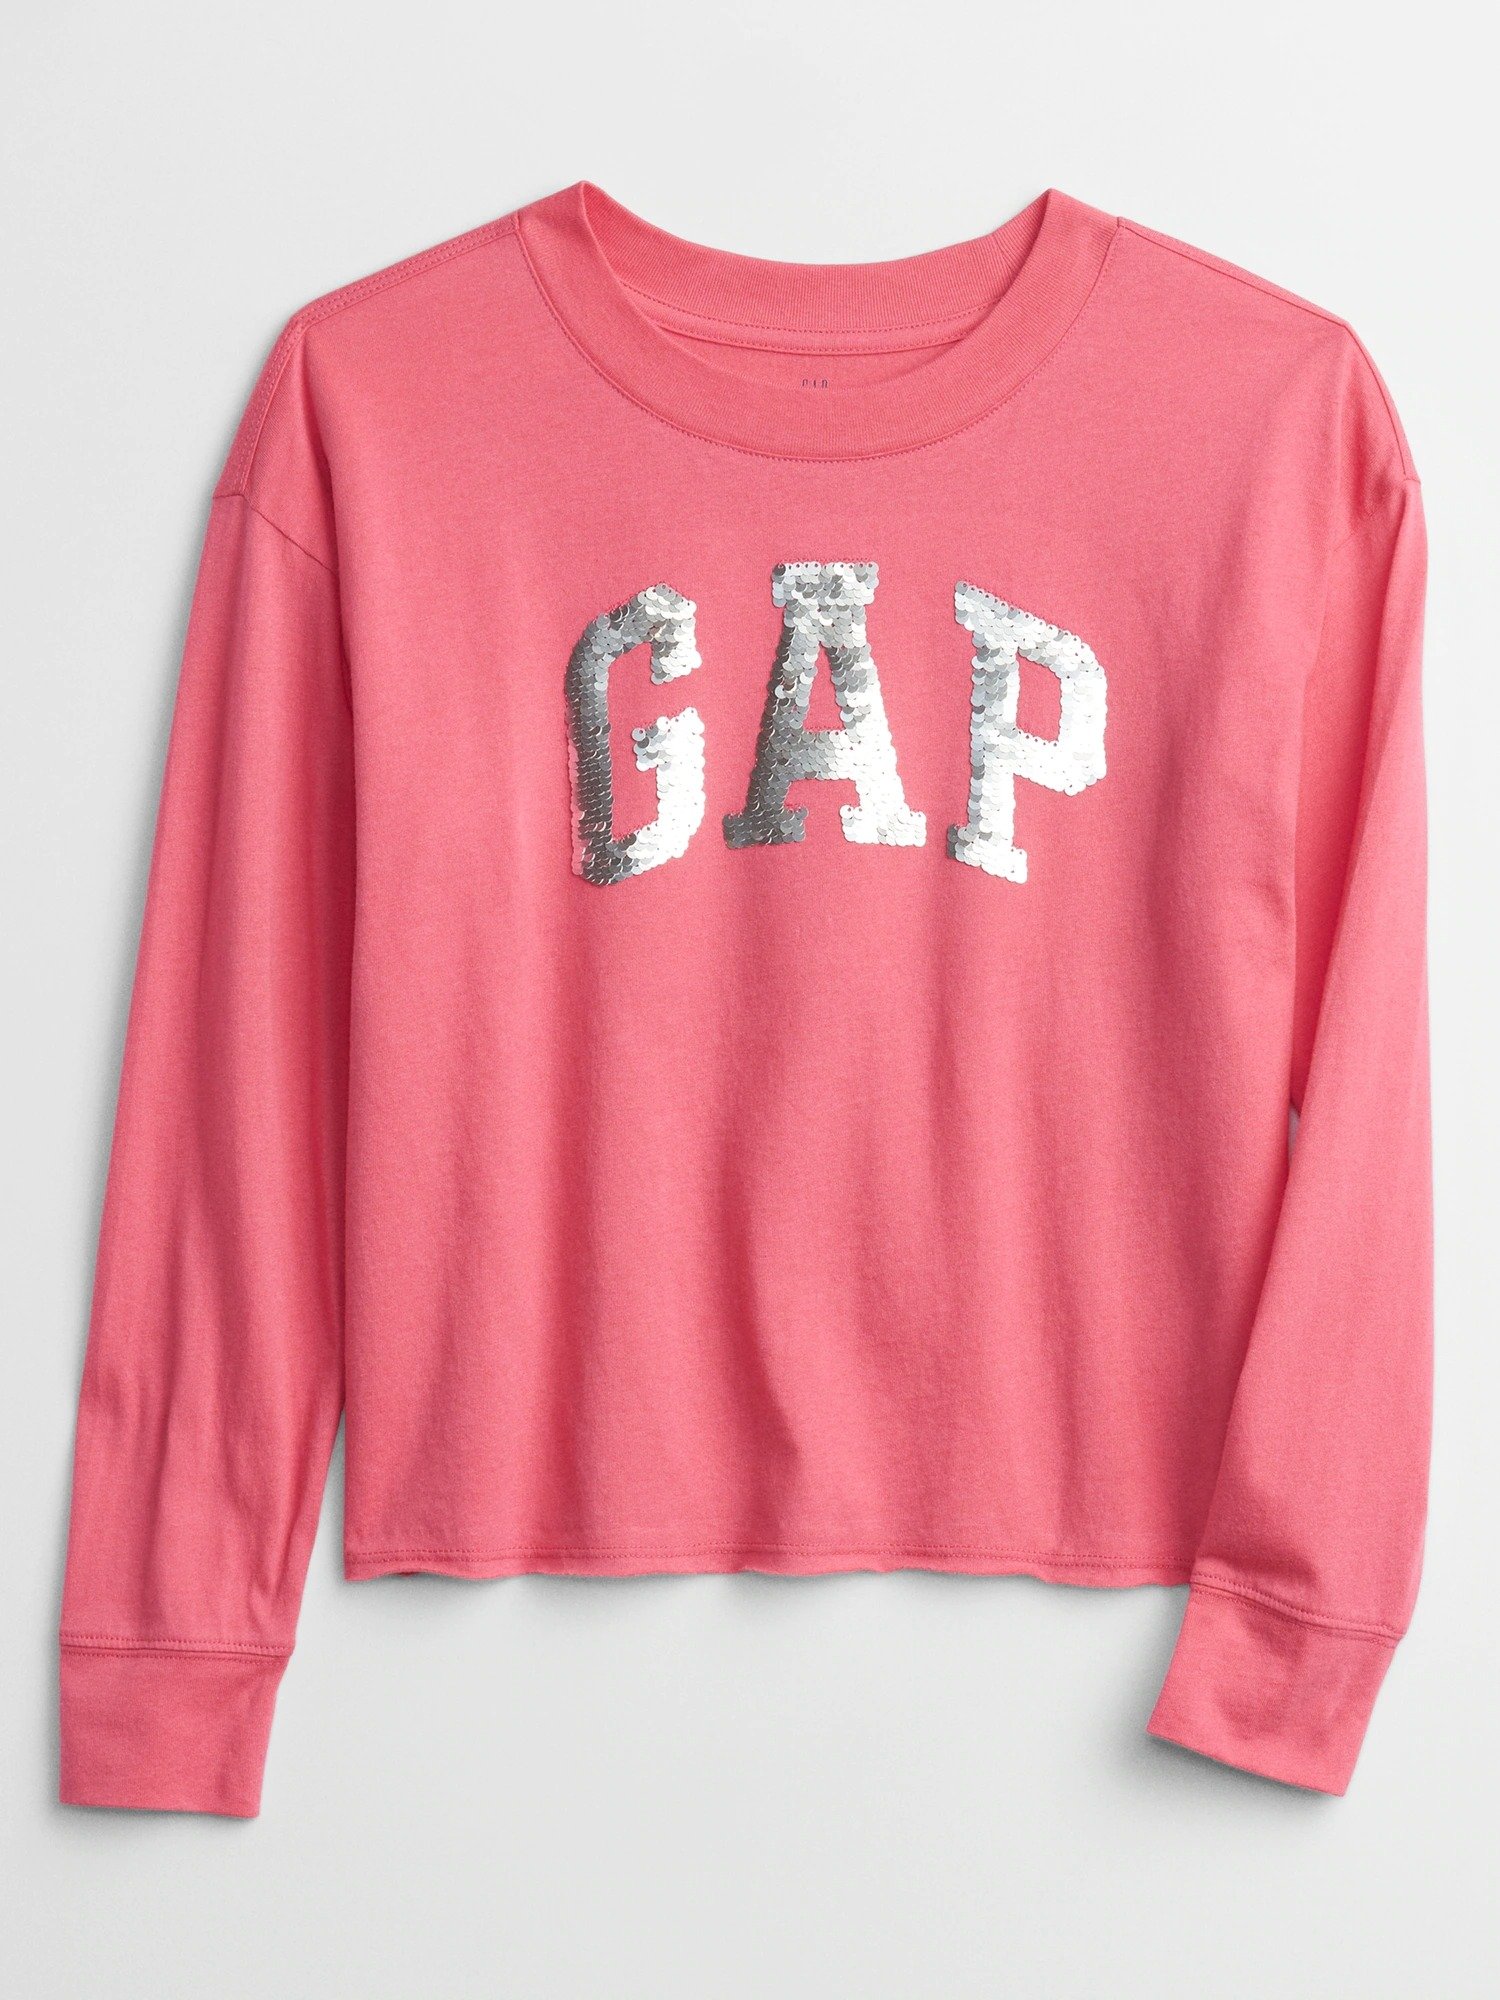 Gap Logo T-Shirt product image